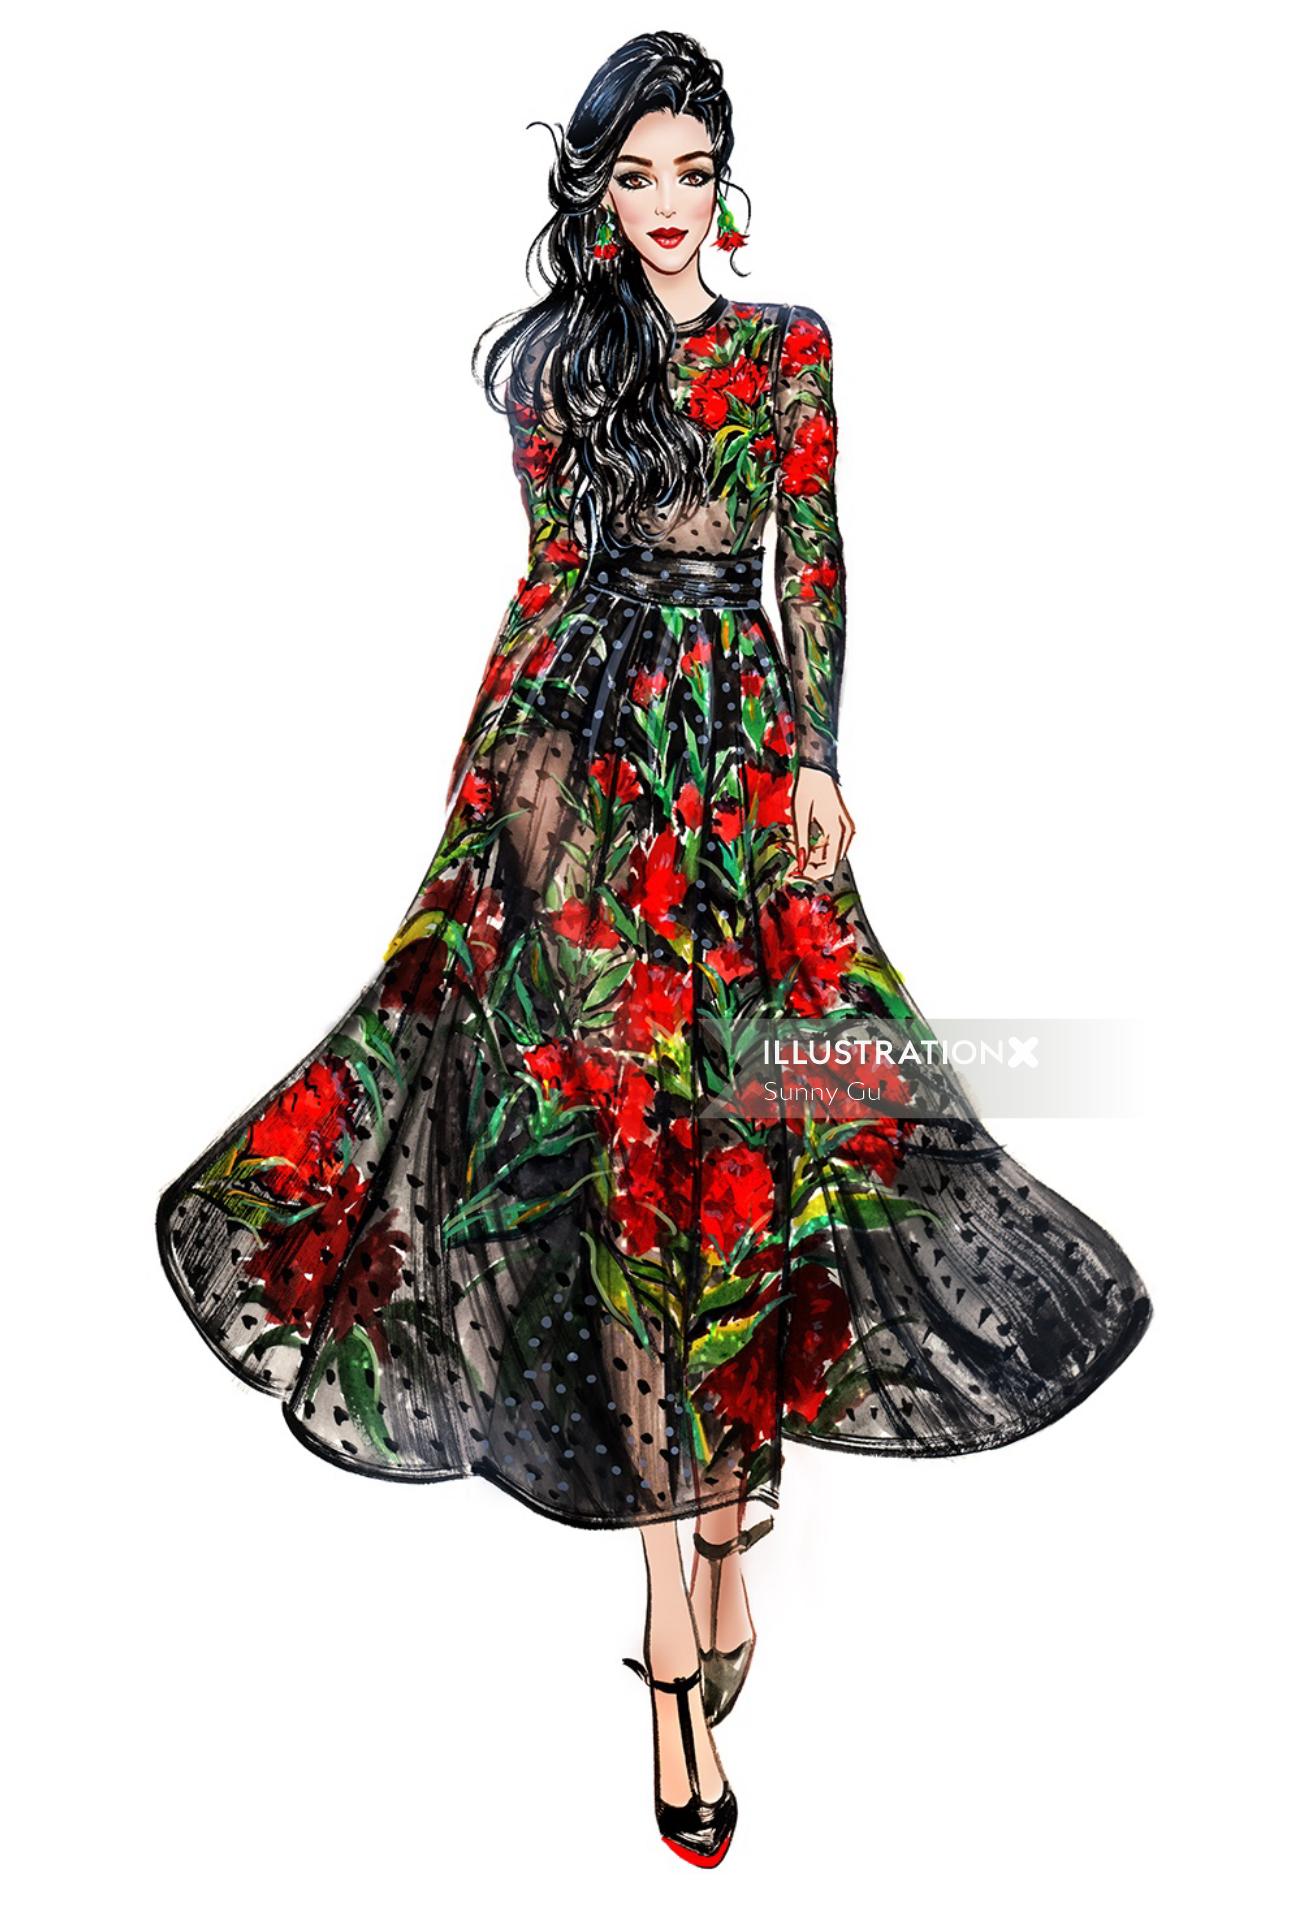 Fashion Girl en robe à fleurs noire